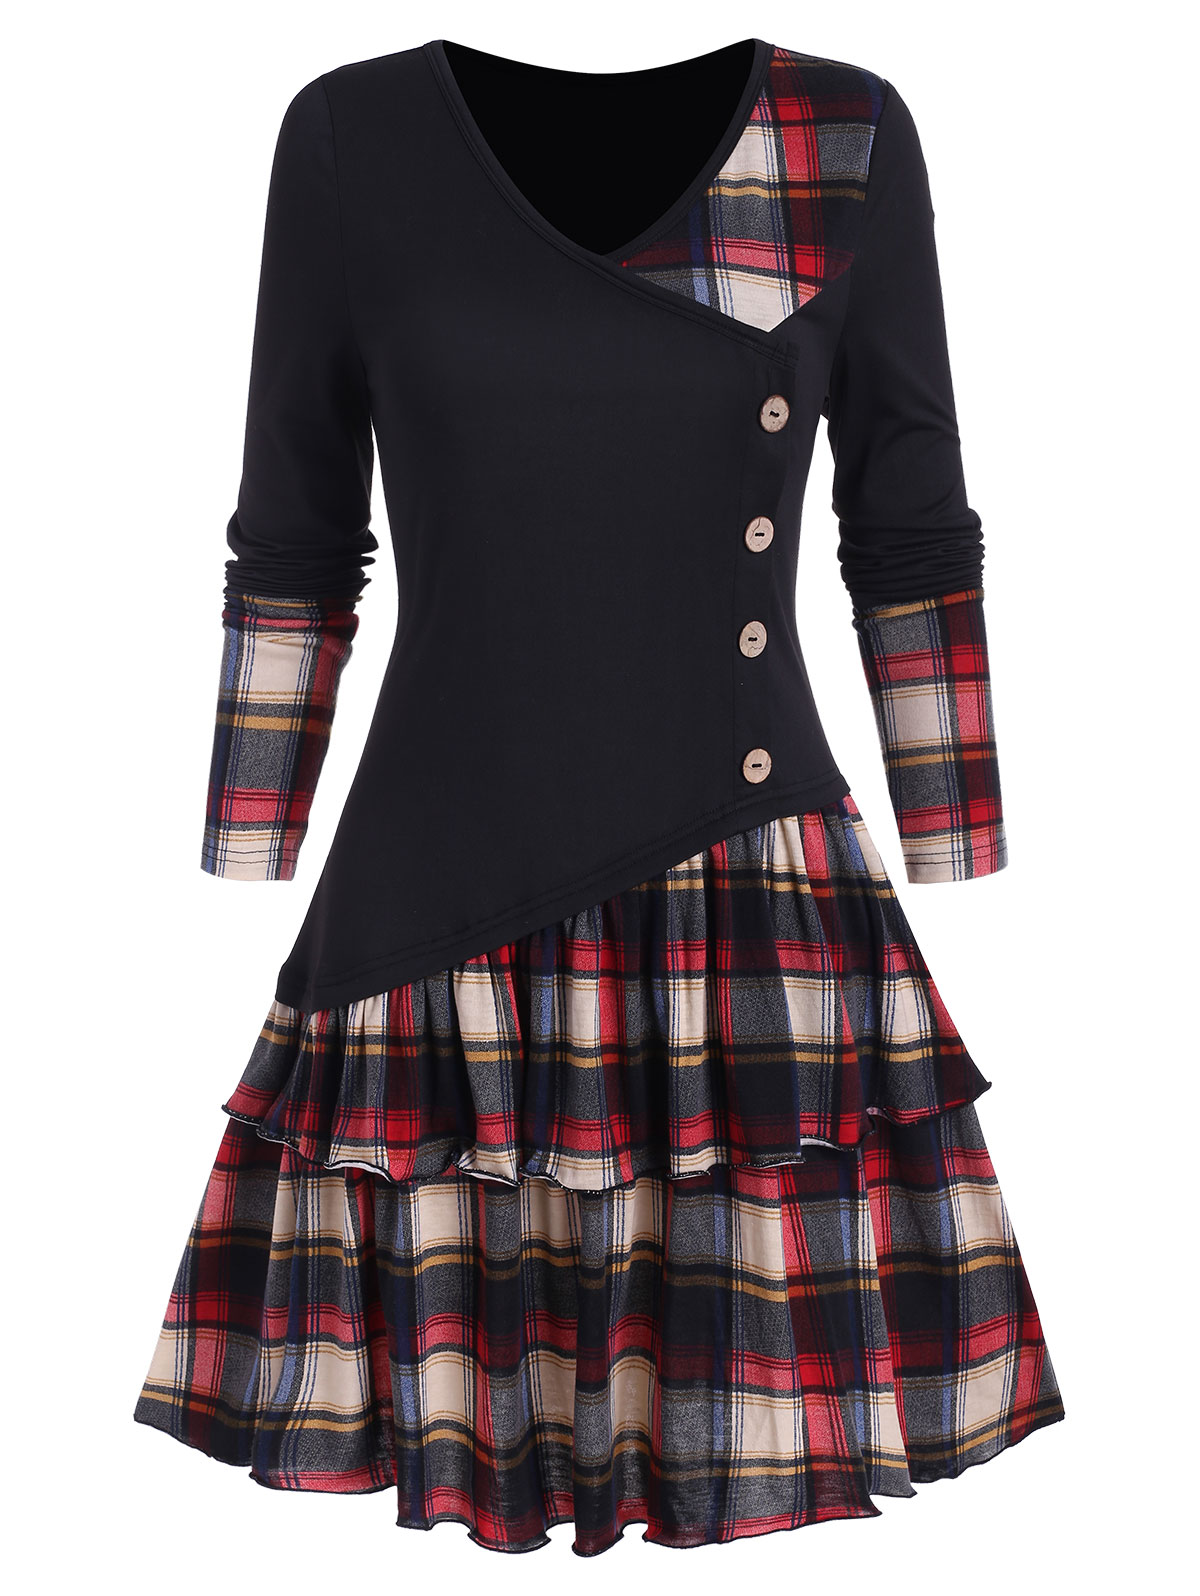 Wipalo Vintage Goth Mini Dress Plus Size Women Plaid Colorblock Button Asymmetric Layered Dress Harajuku Streetwear Casual Dress